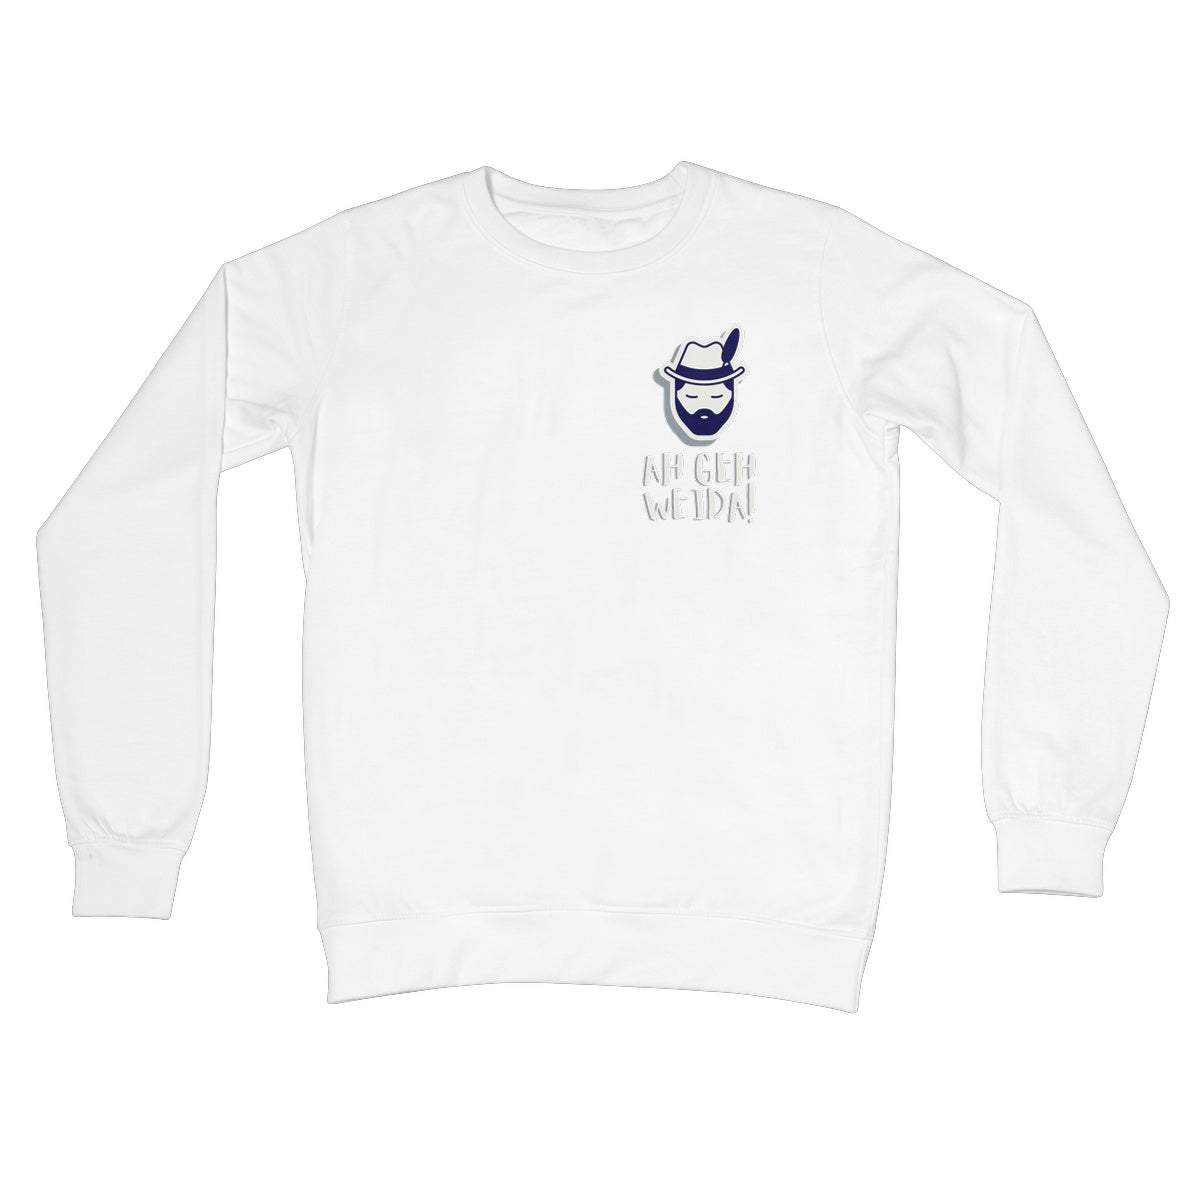 Men's Bavarian Graphic Sweatshirt "Ah, Geh weida" navy print - 5 colours - Bavari Shop - Bavarian Outfits, Dirndl, Lederhosen & Accessories